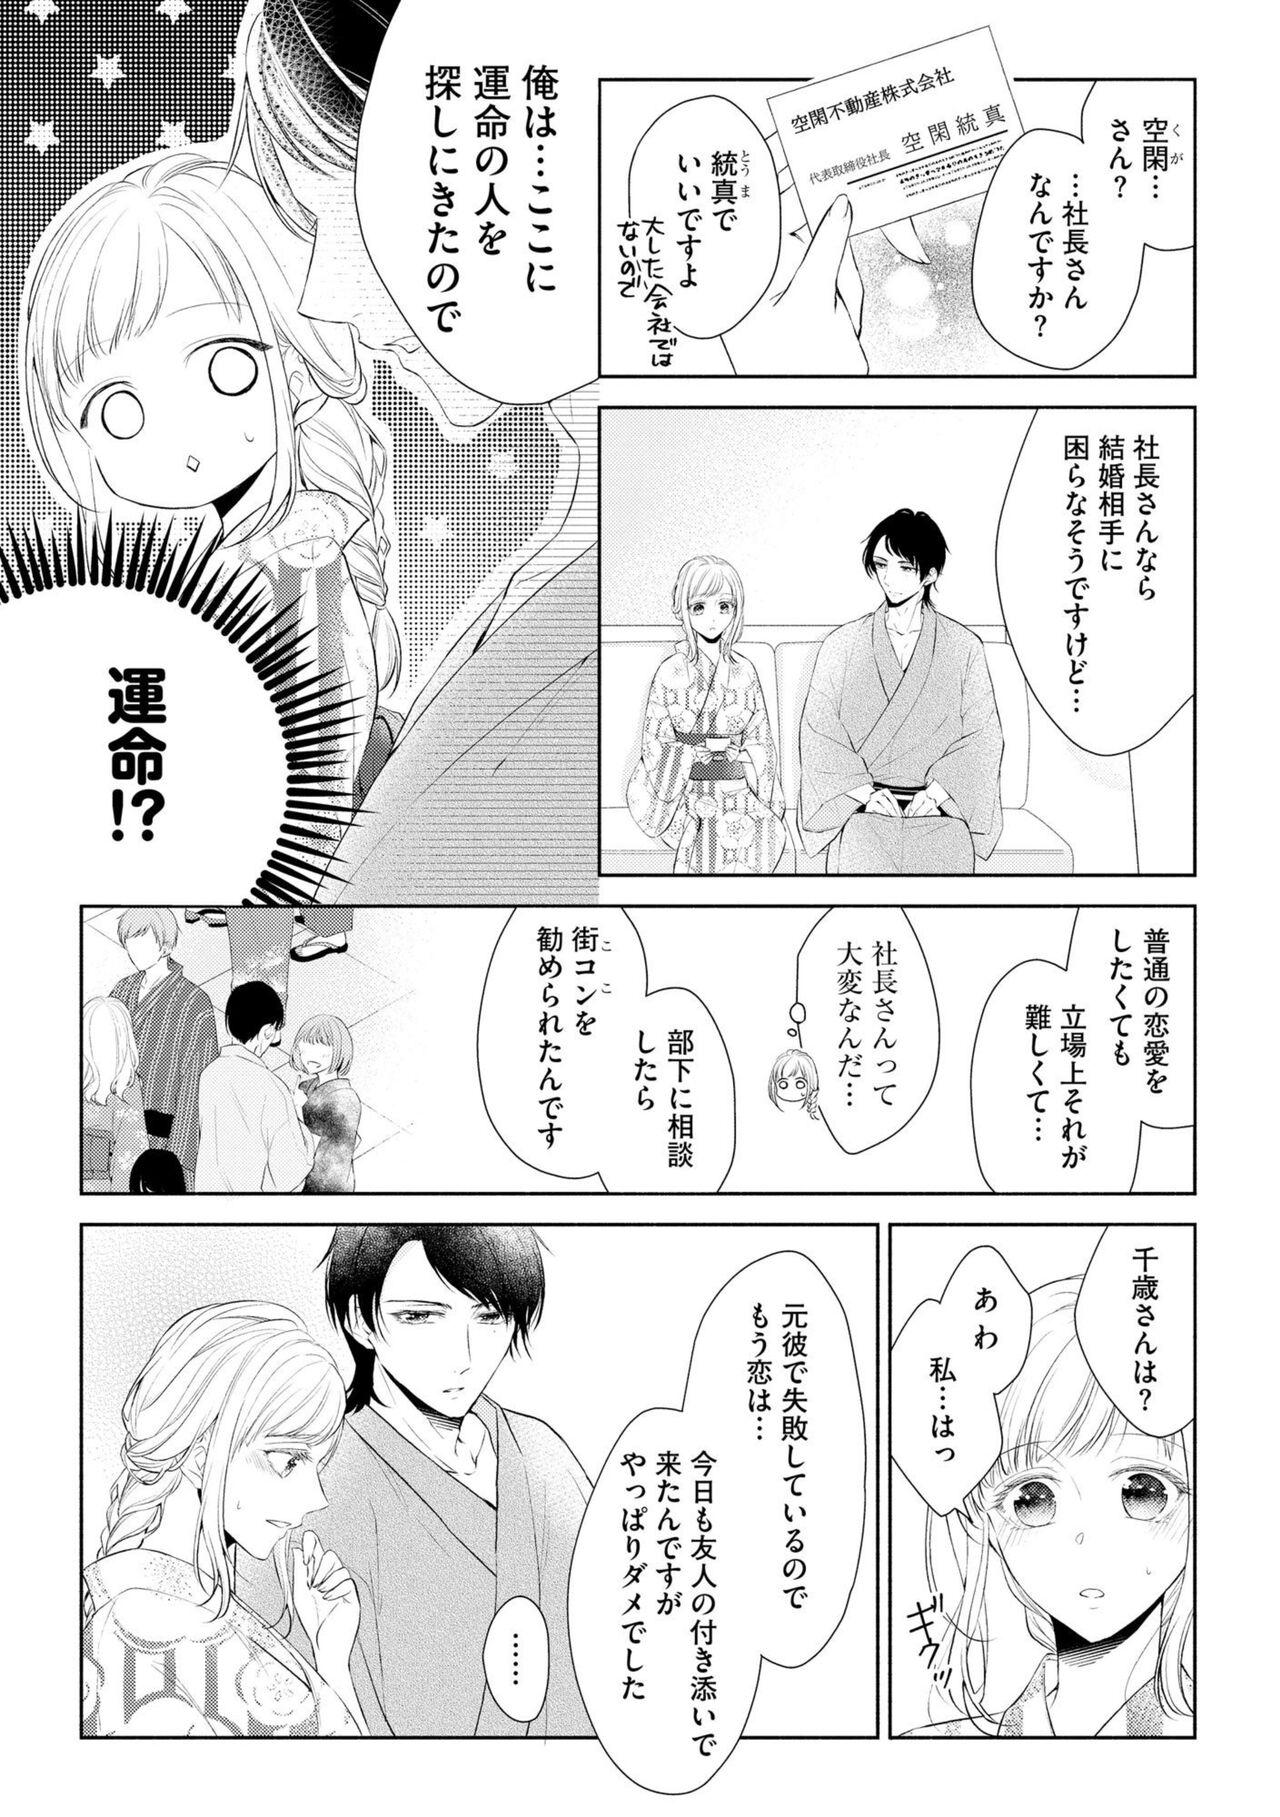 Banho Koibito wa Amakute Junjōna Yakuza-sama itto Ecchi wa oku made Torotoro 1 Perverted - Page 8